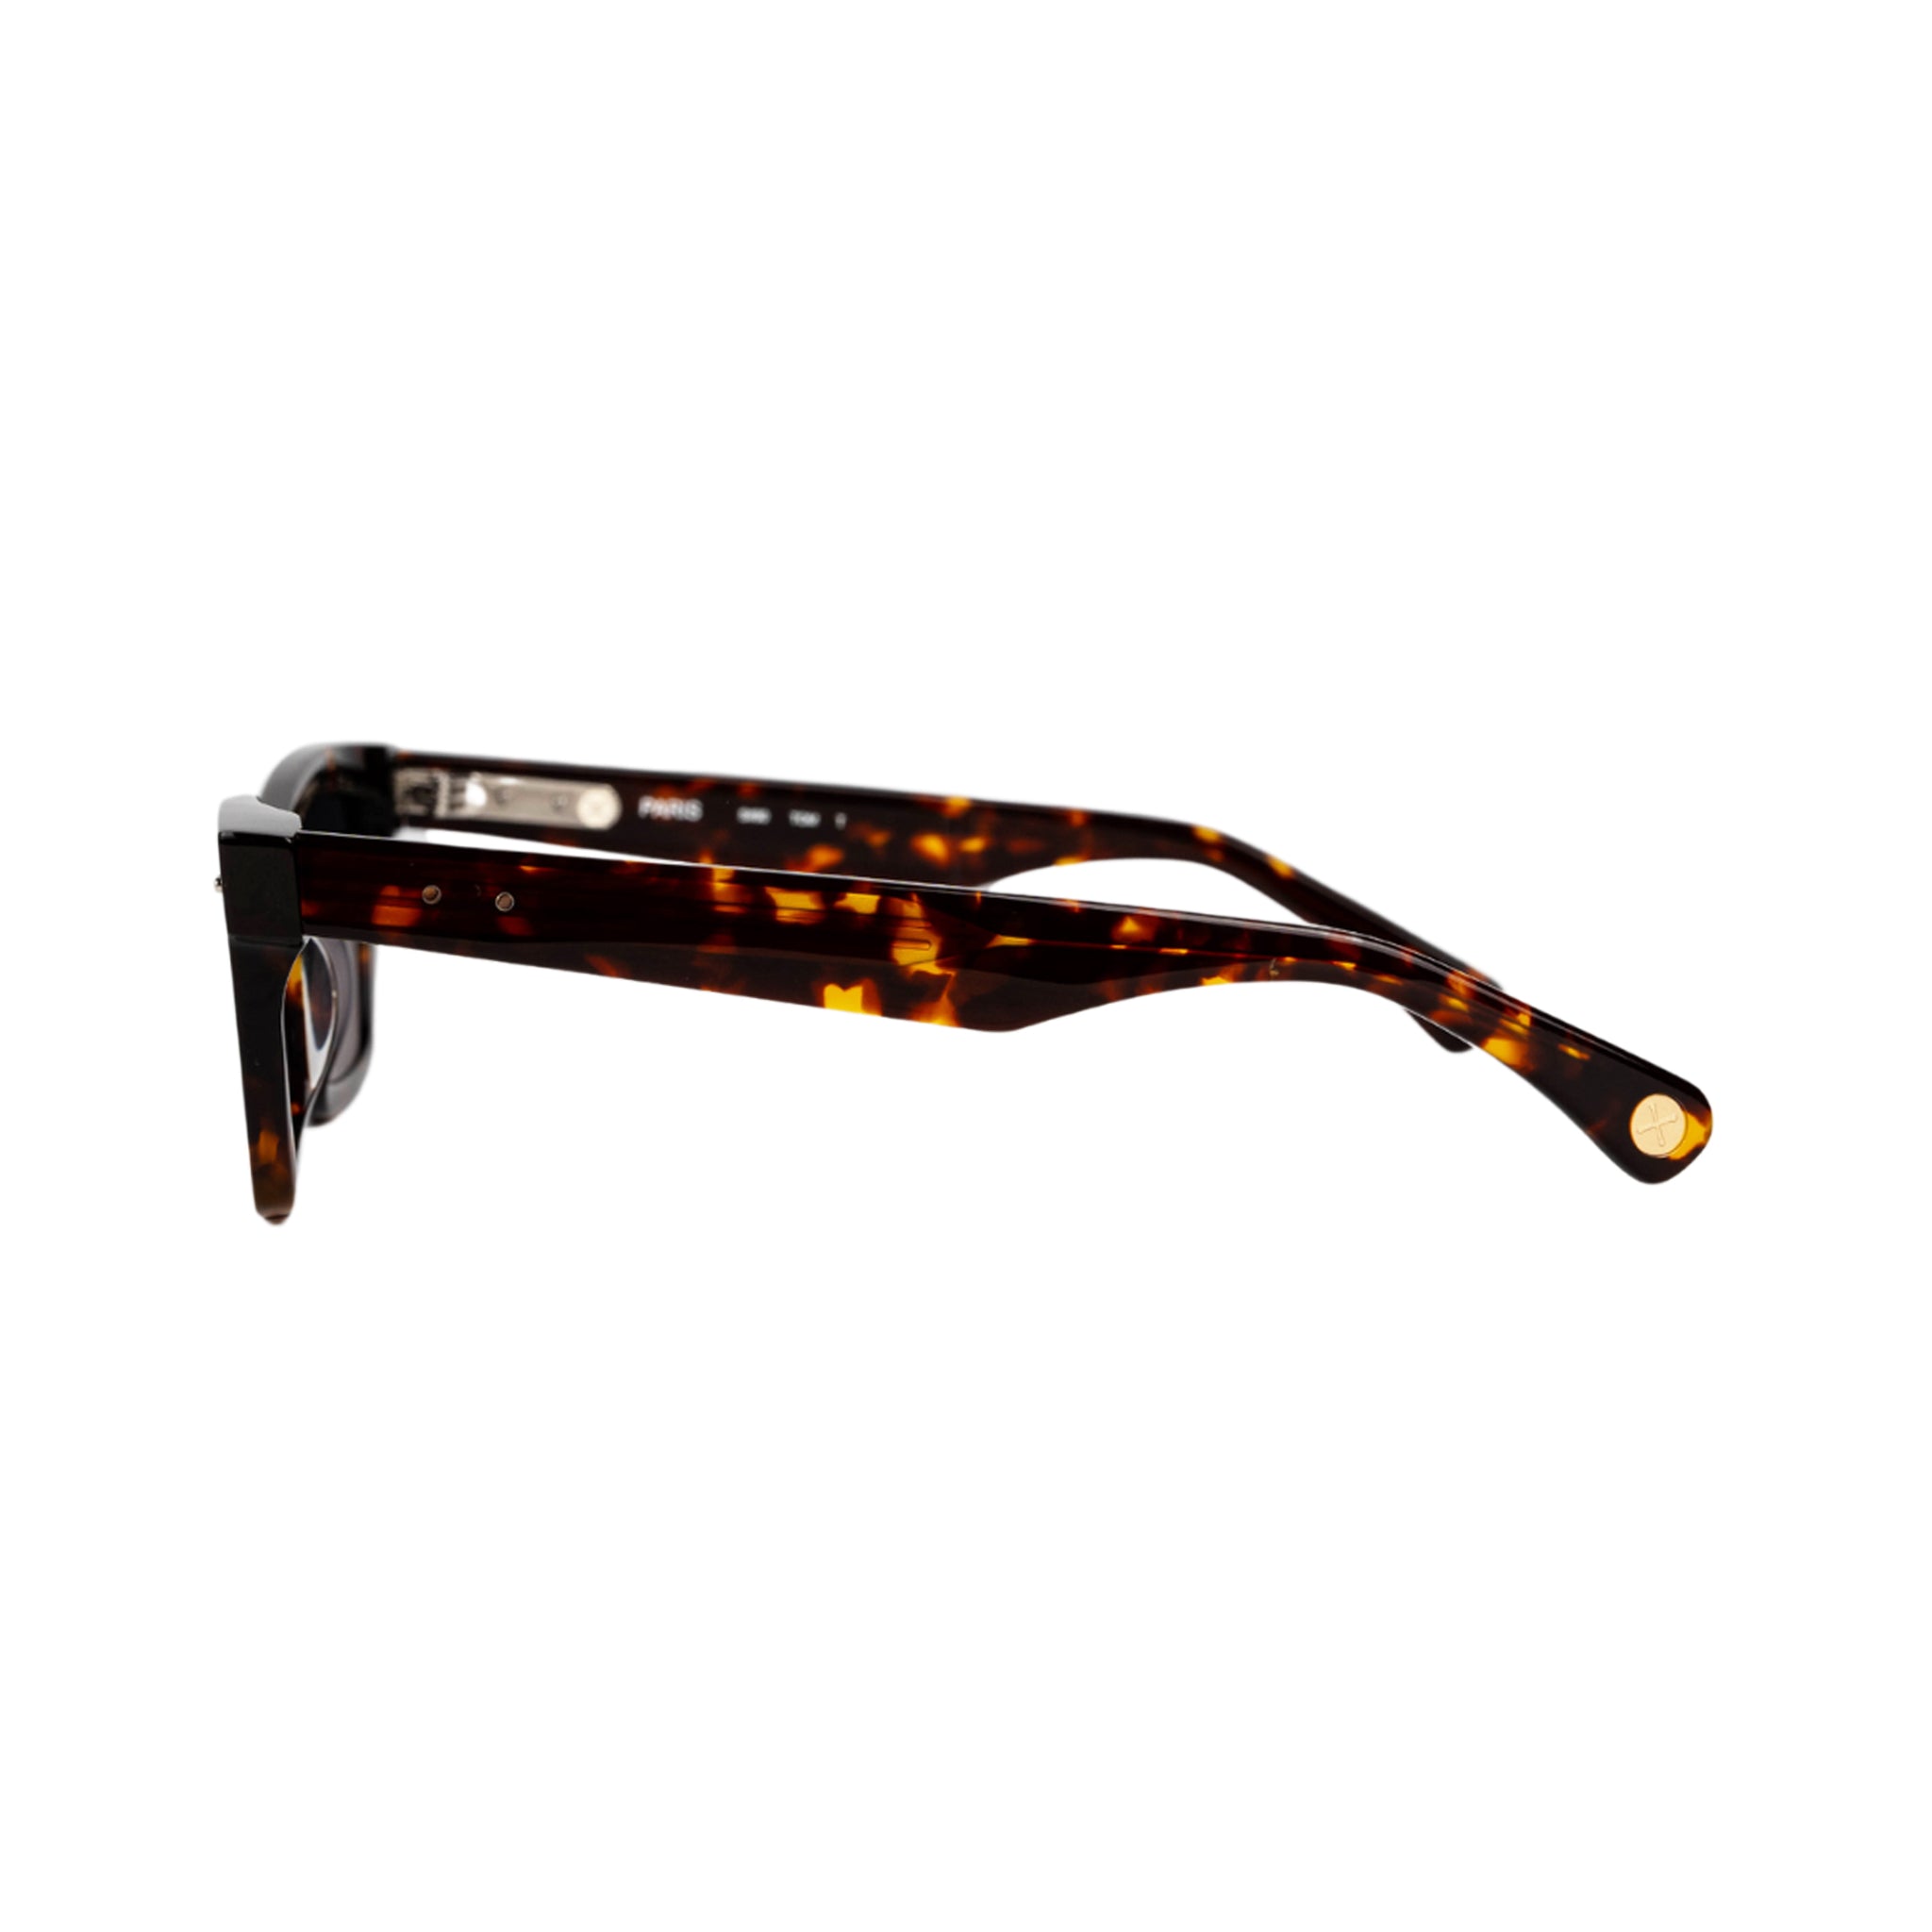 S90 Tom occhiali da sole